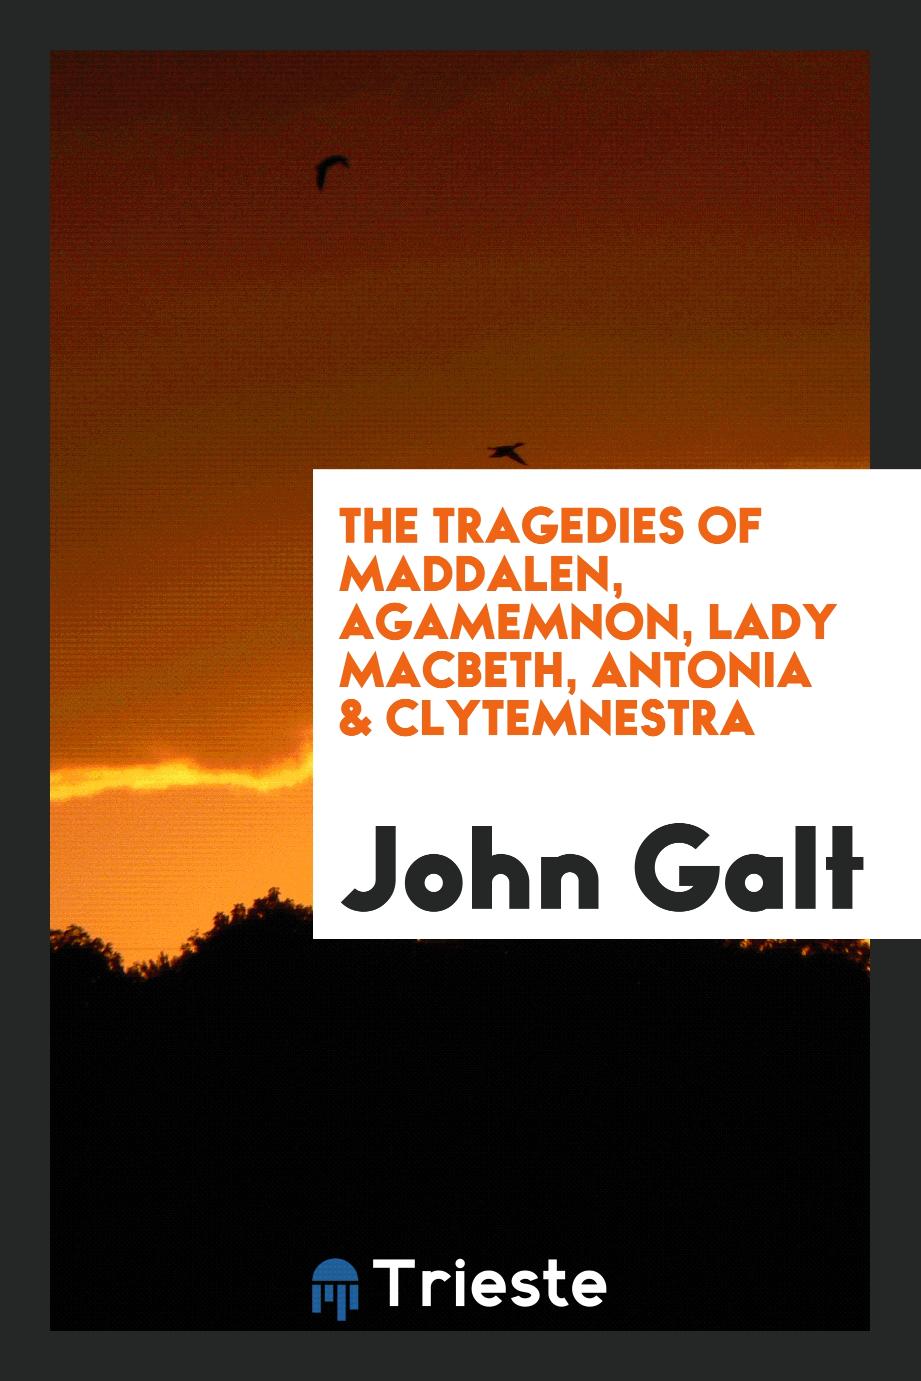 The tragedies of Maddalen, Agamemnon, Lady Macbeth, Antonia & Clytemnestra